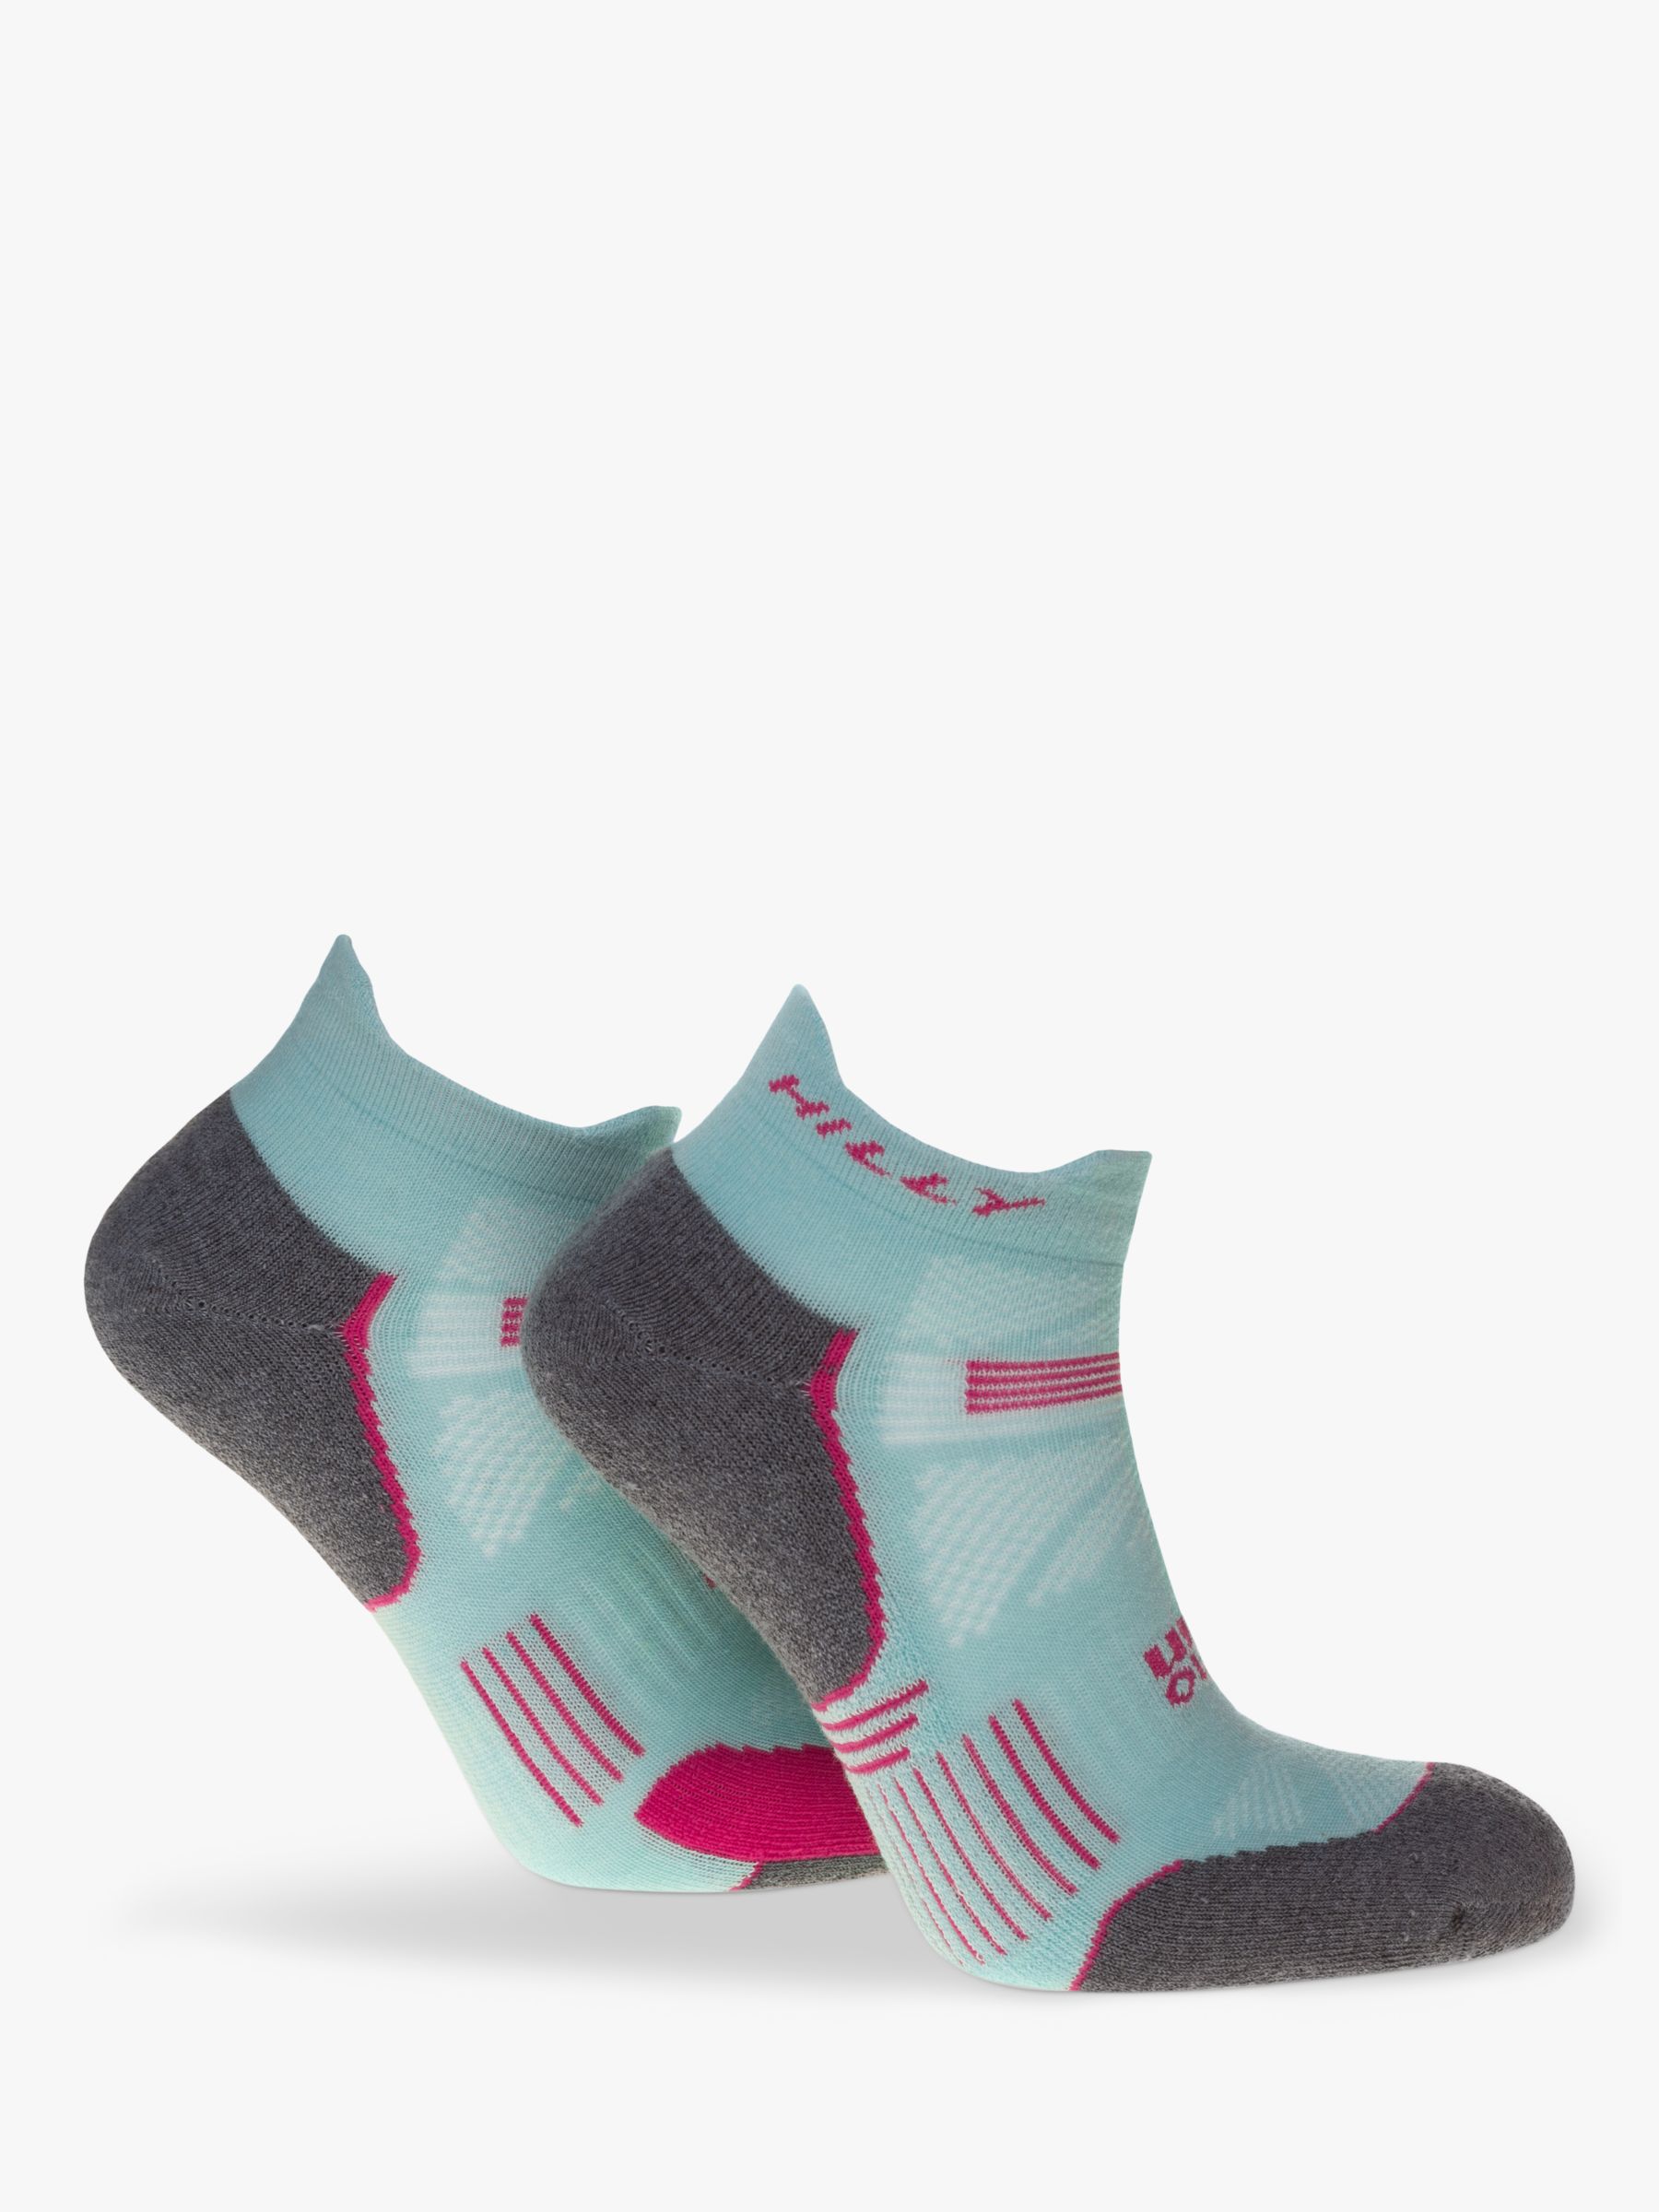 Hilly Supreme Ankle Running Socks, Aquamarine/Grey Marl, S